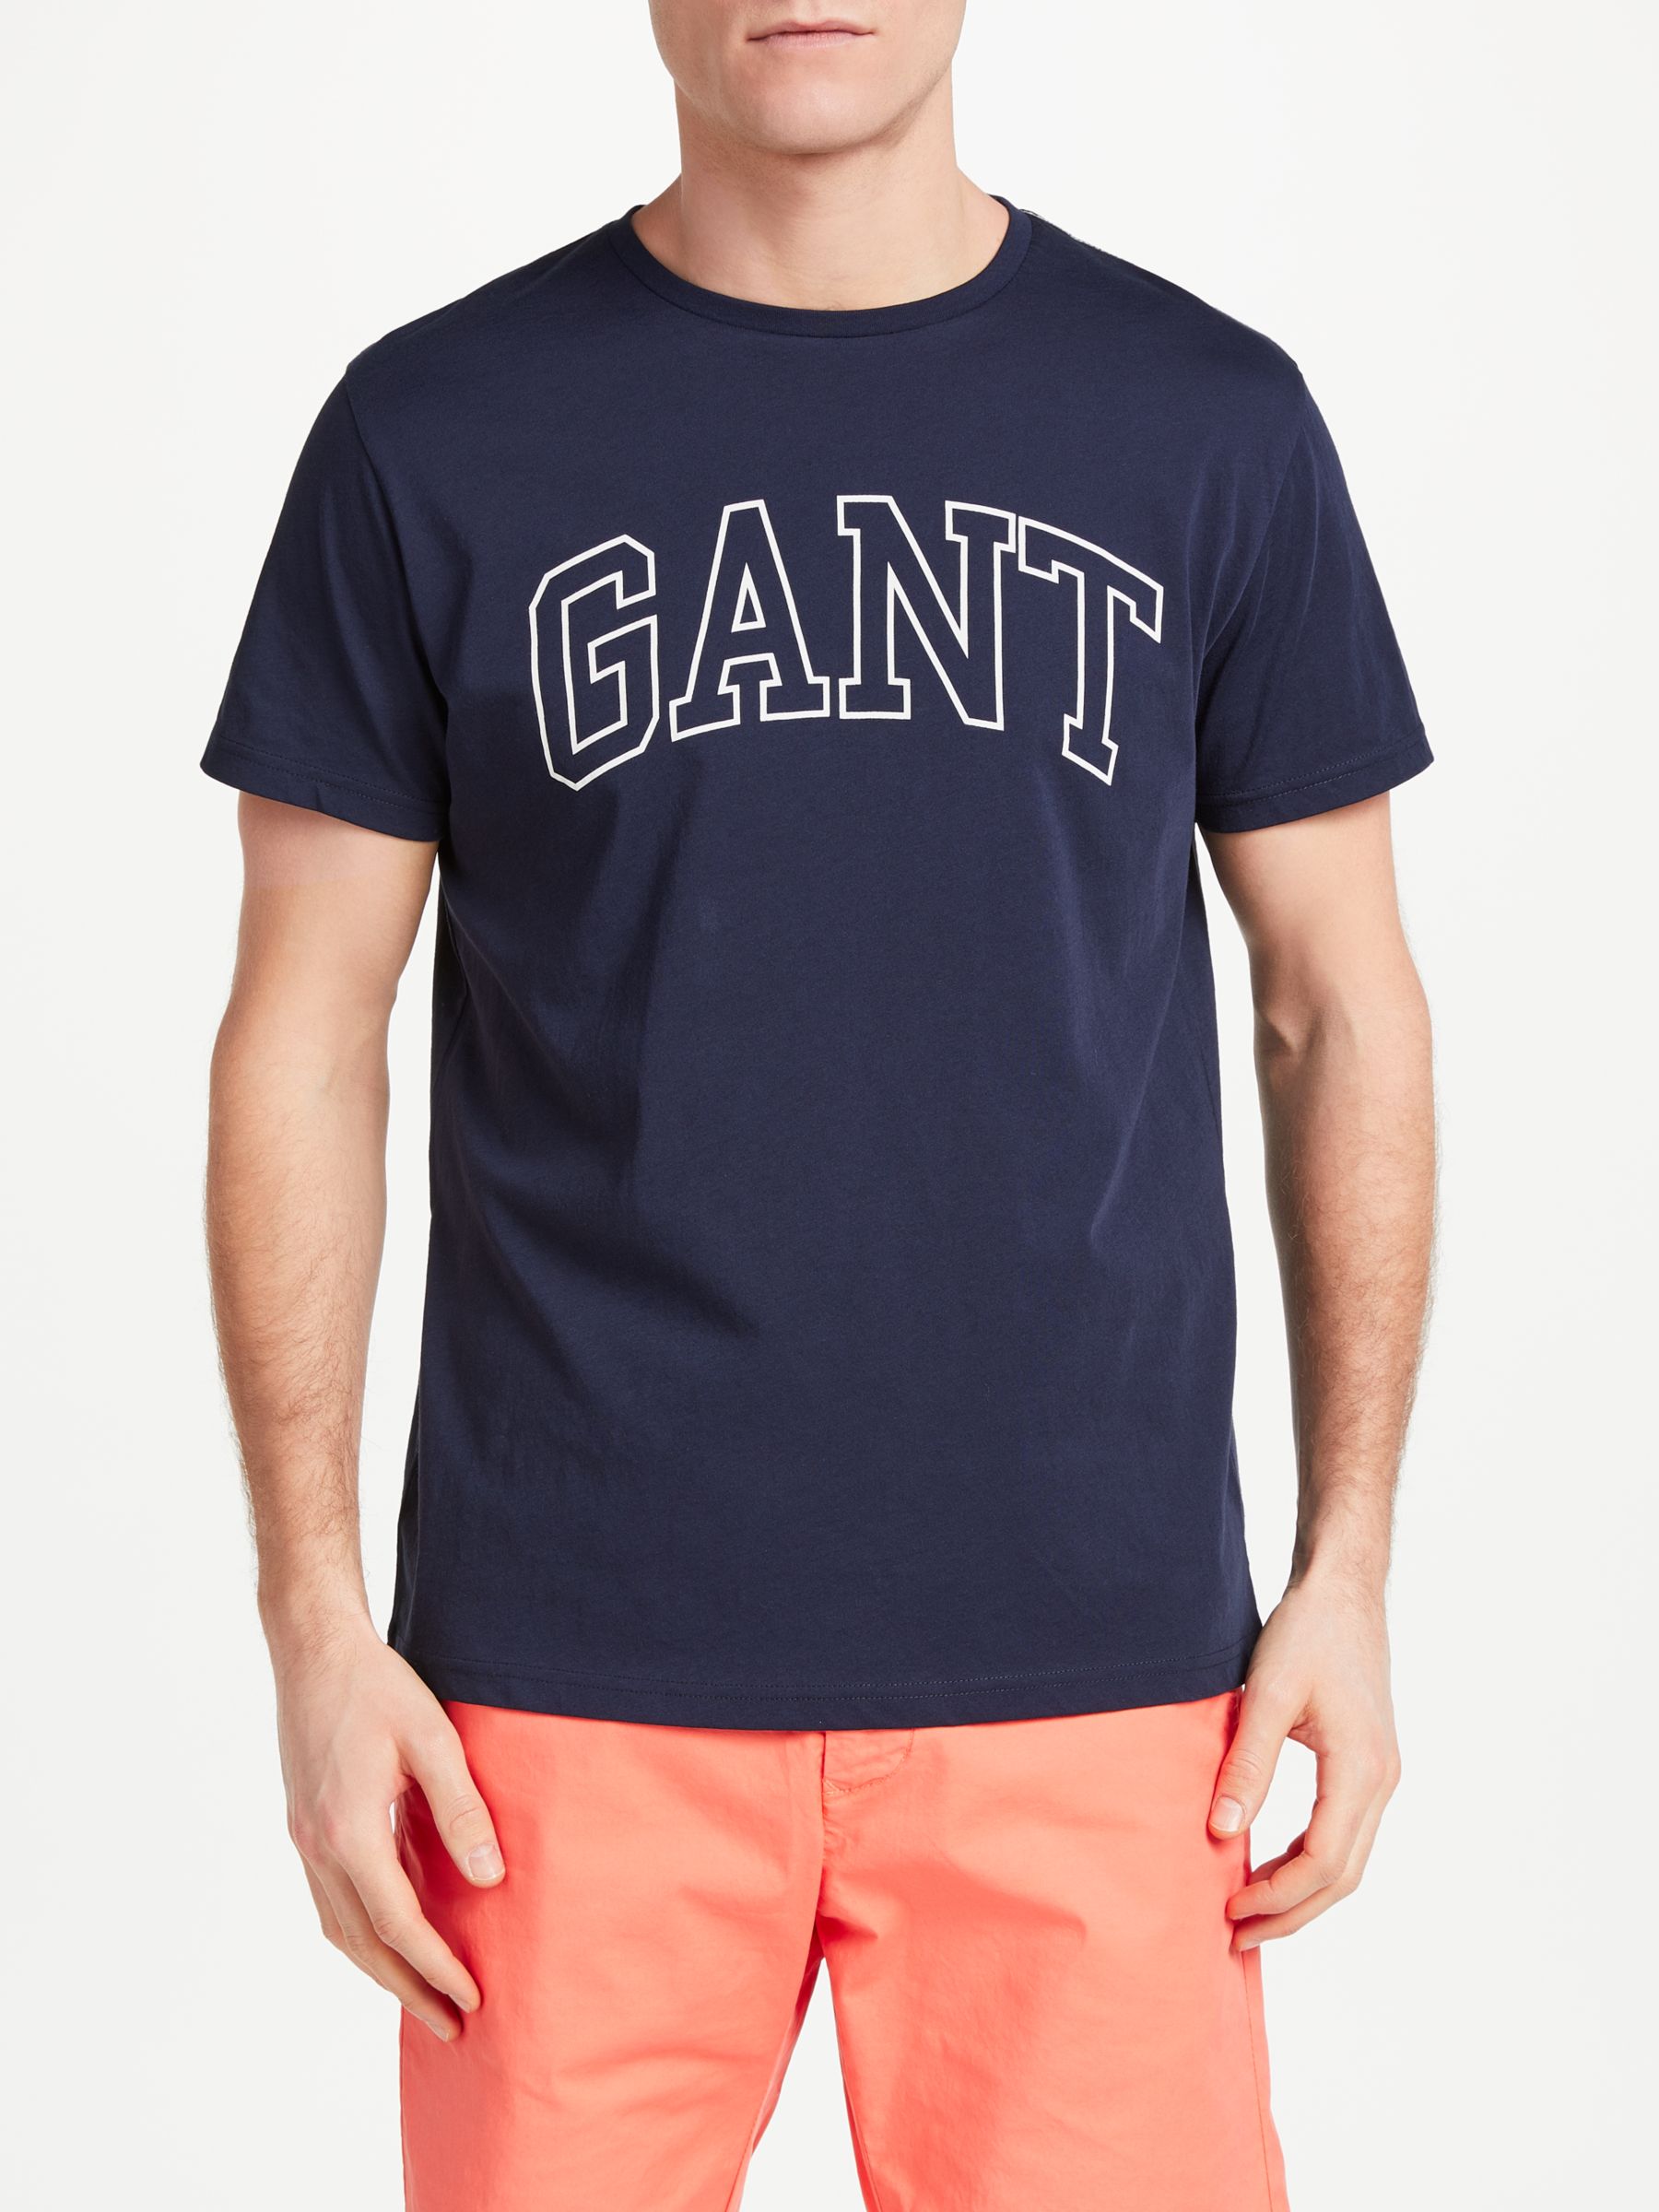 Gant Outline Print Cotton T-Shirt, Navy, XXXL